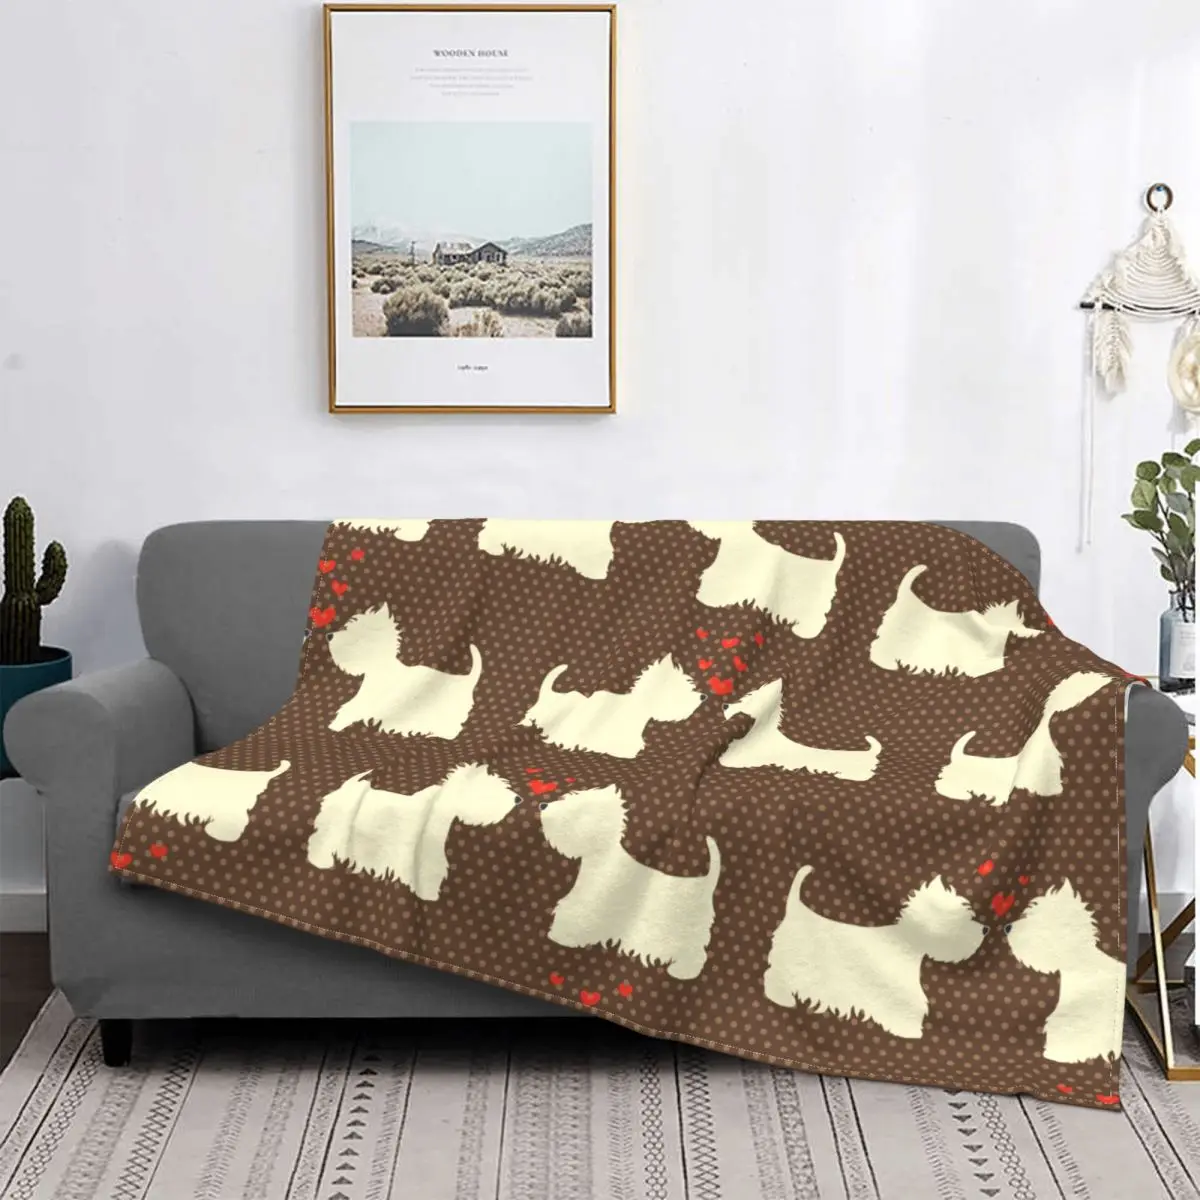 

Одеяло Westie West Highland Terrier, одеяло, супермягкое дышащее покрывало для кровати, дивана